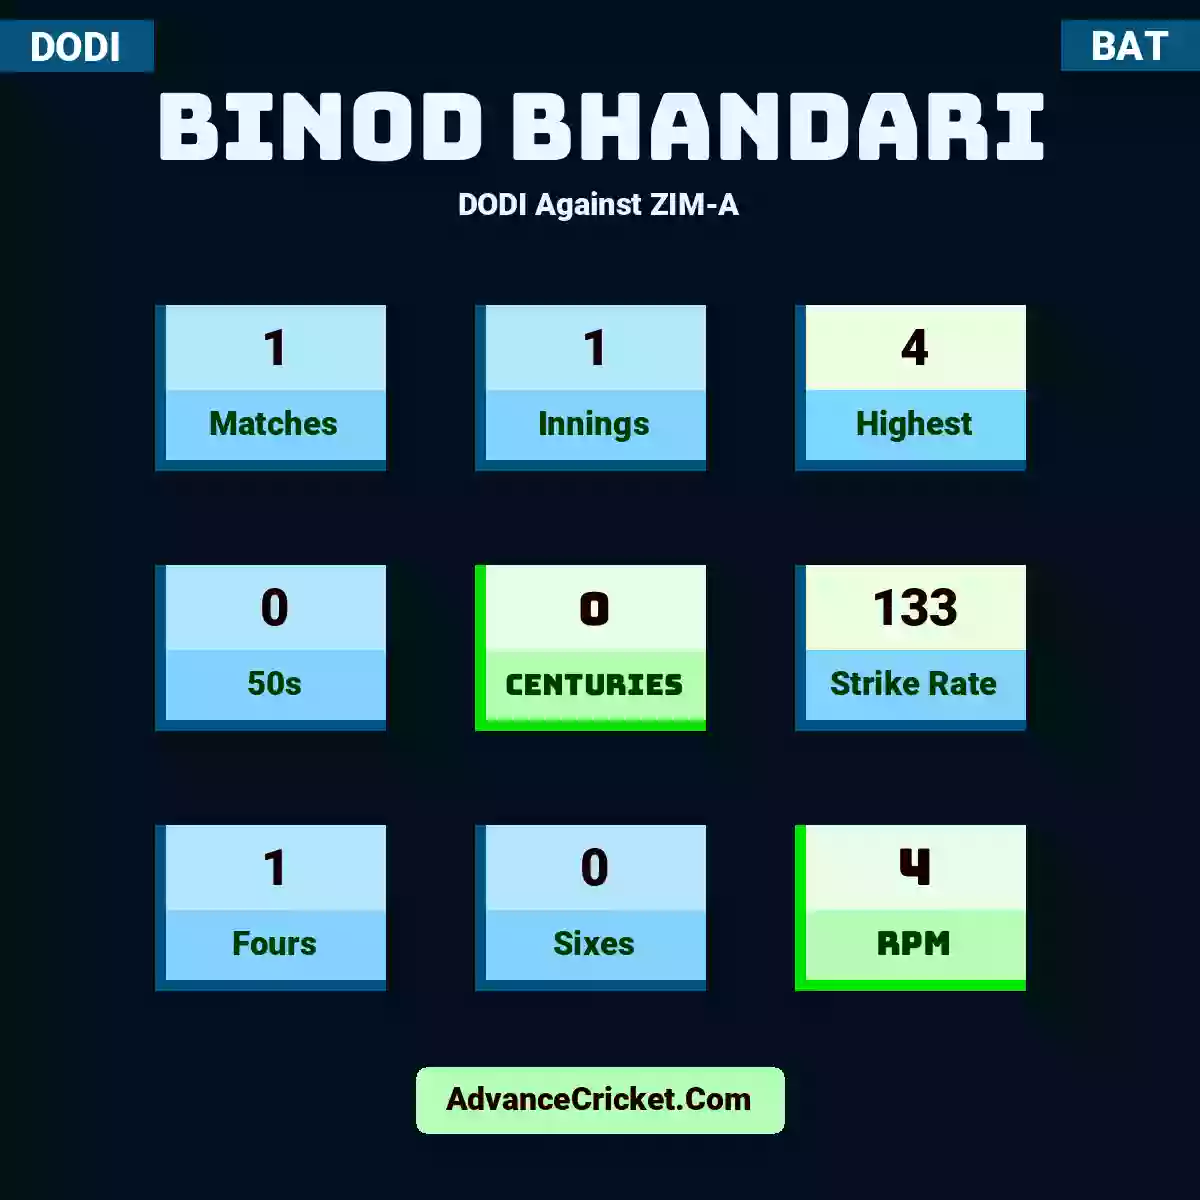 Binod Bhandari DODI  Against ZIM-A, Binod Bhandari played 1 matches, scored 4 runs as highest, 0 half-centuries, and 0 centuries, with a strike rate of 133. B.Bhandari hit 1 fours and 0 sixes, with an RPM of 4.